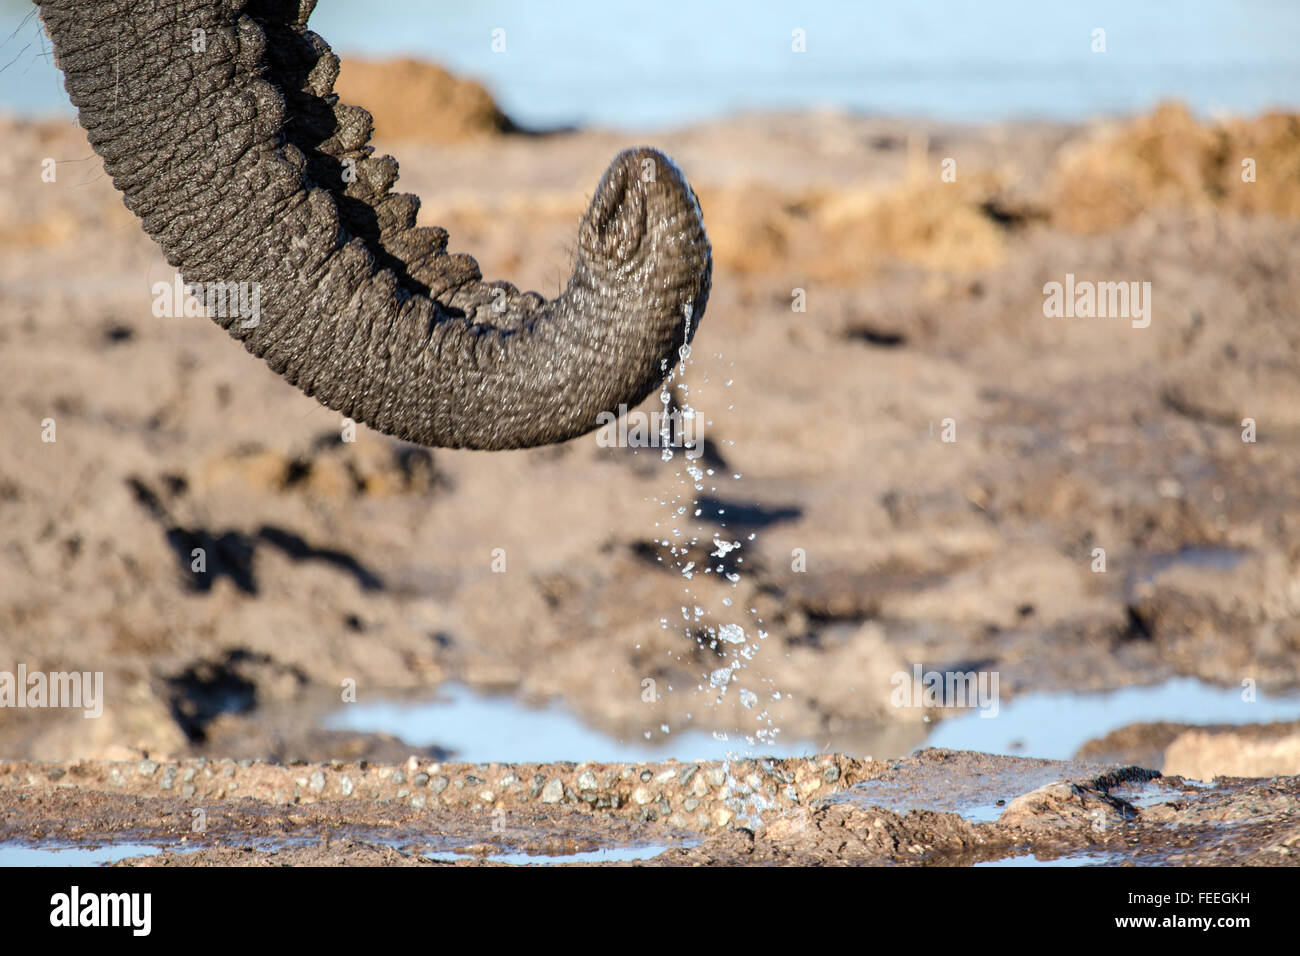 Detalles de un elefante africano Foto de stock